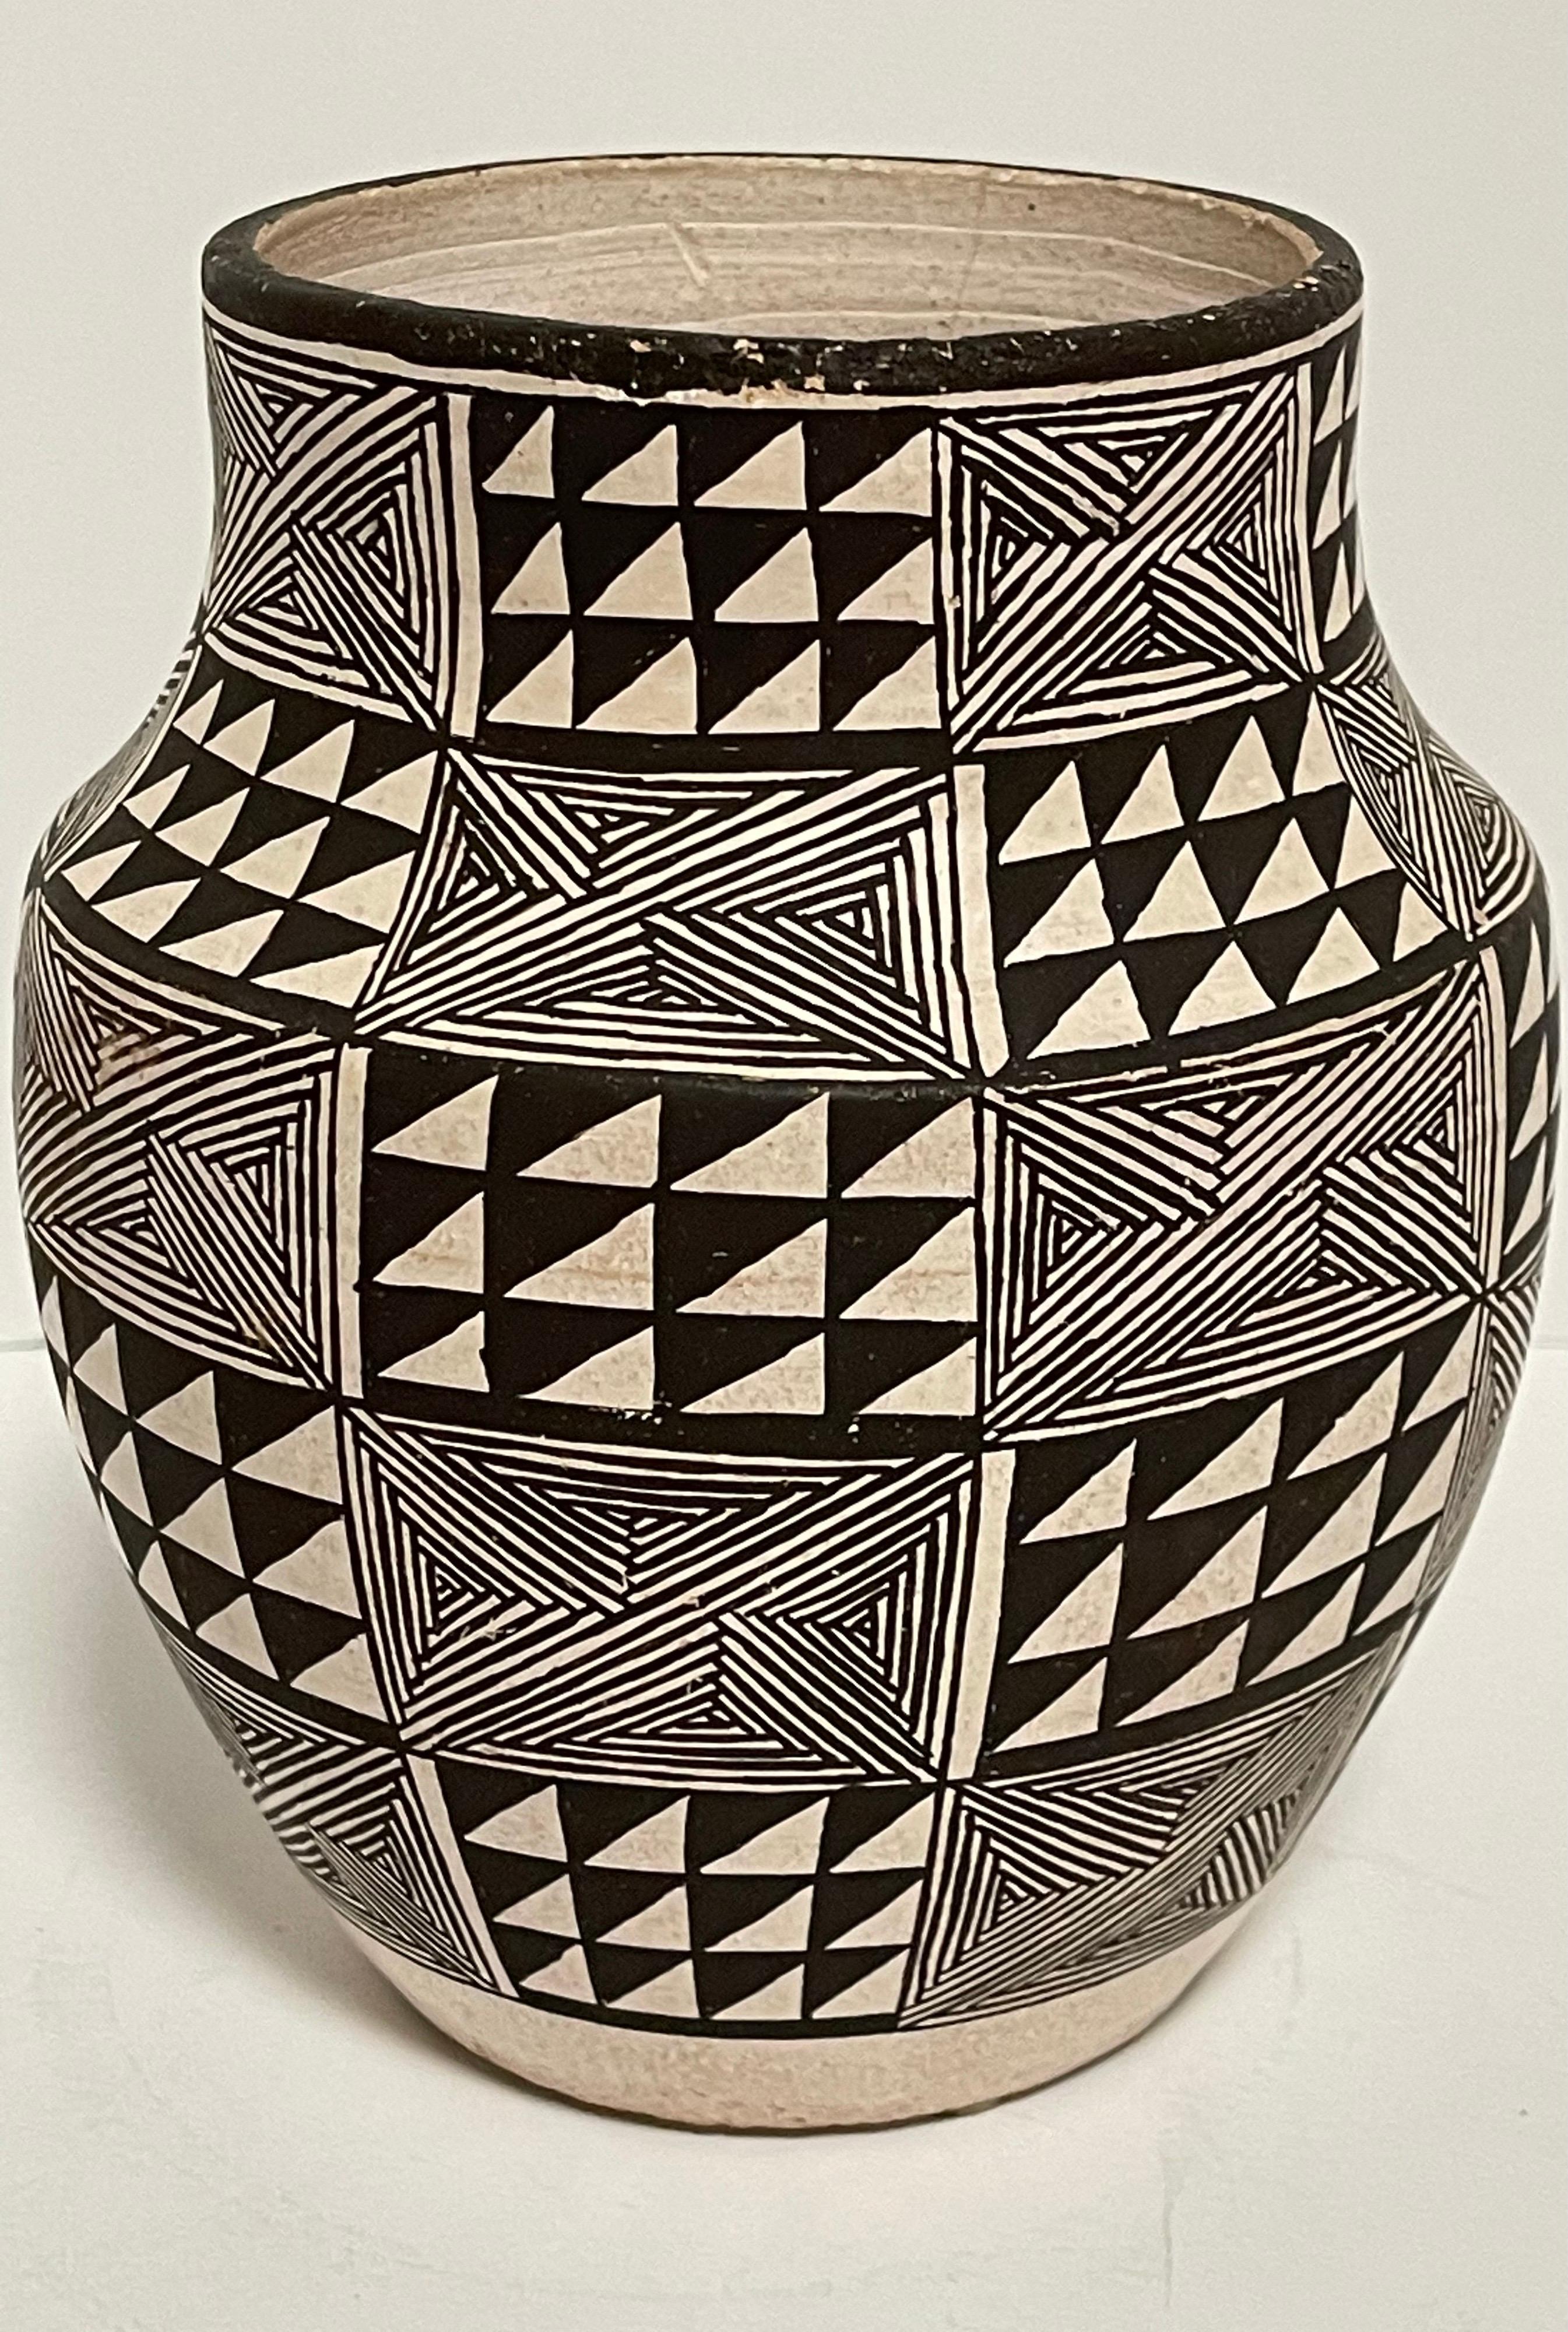 acoma pottery designs